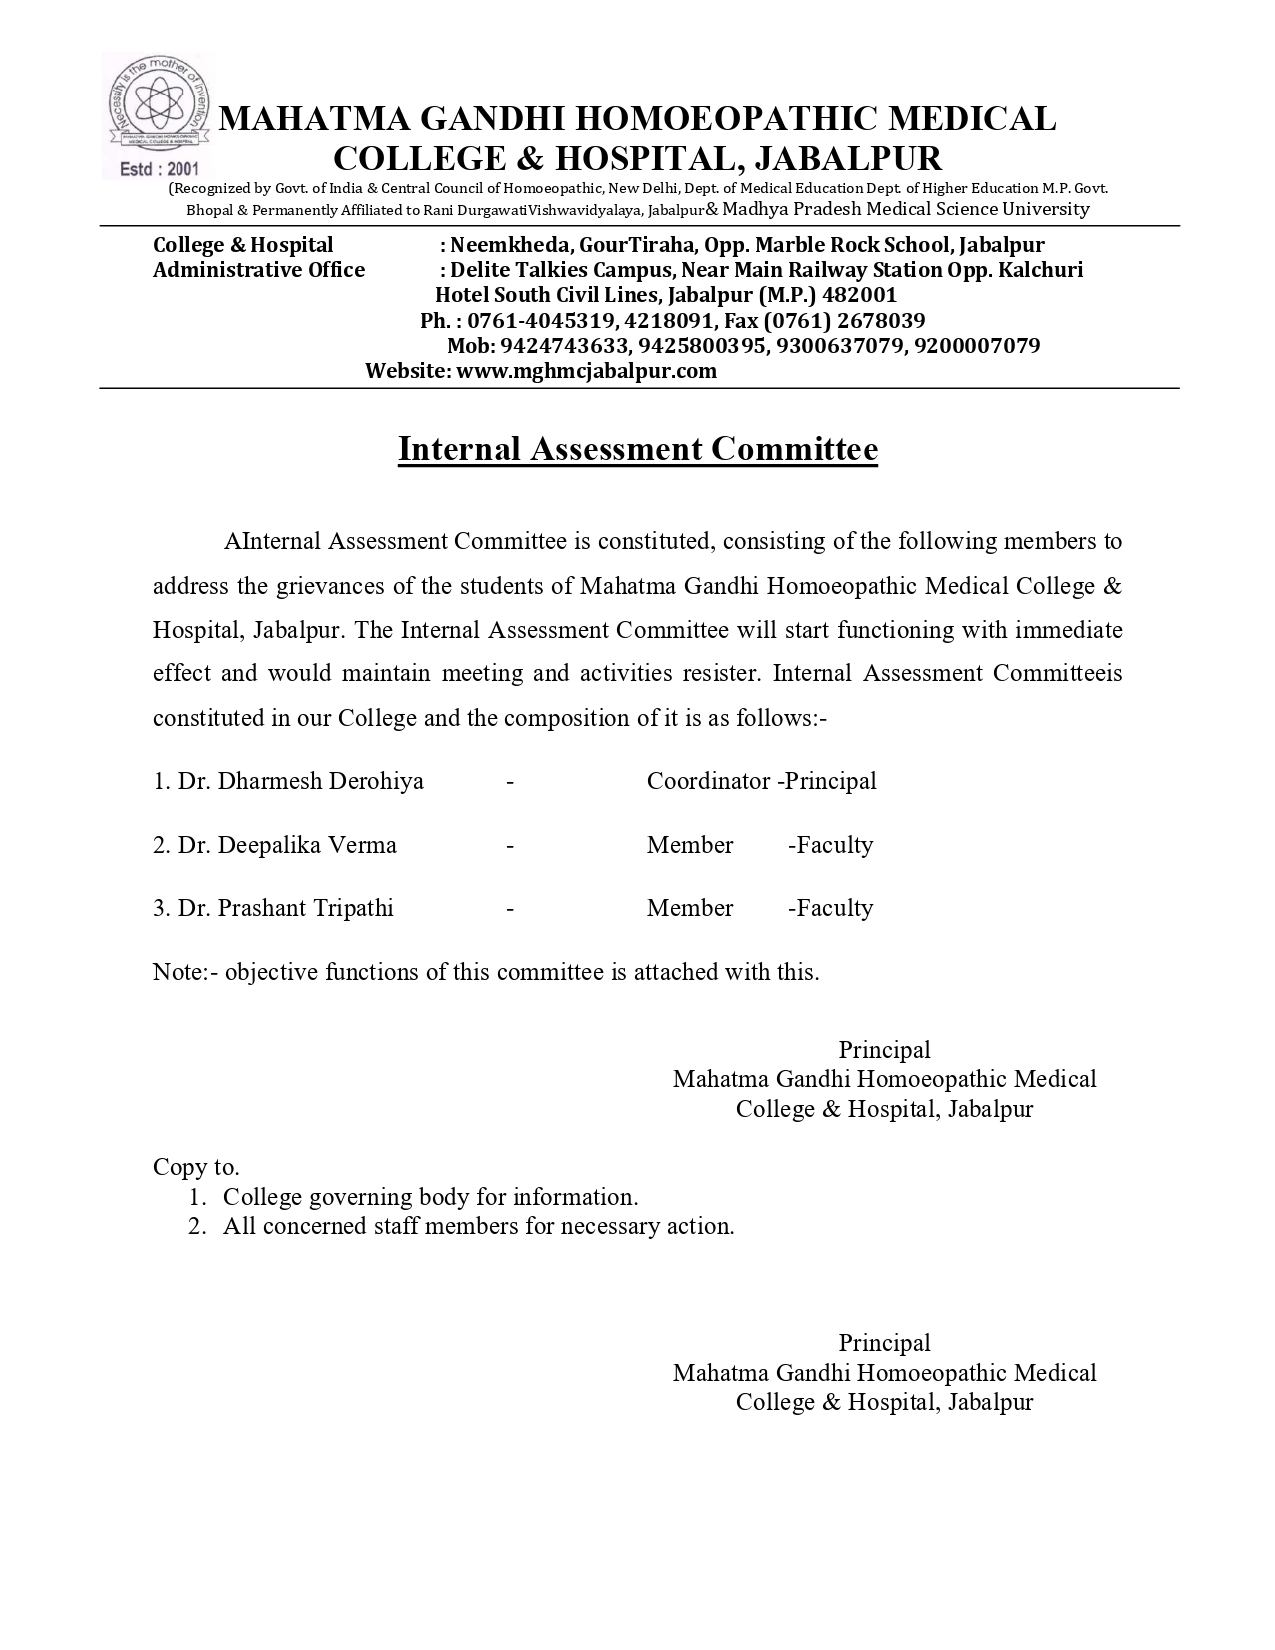 Mahatma Gandhi Homoeopathic Medical College & Hospital Internal Assessment Committee